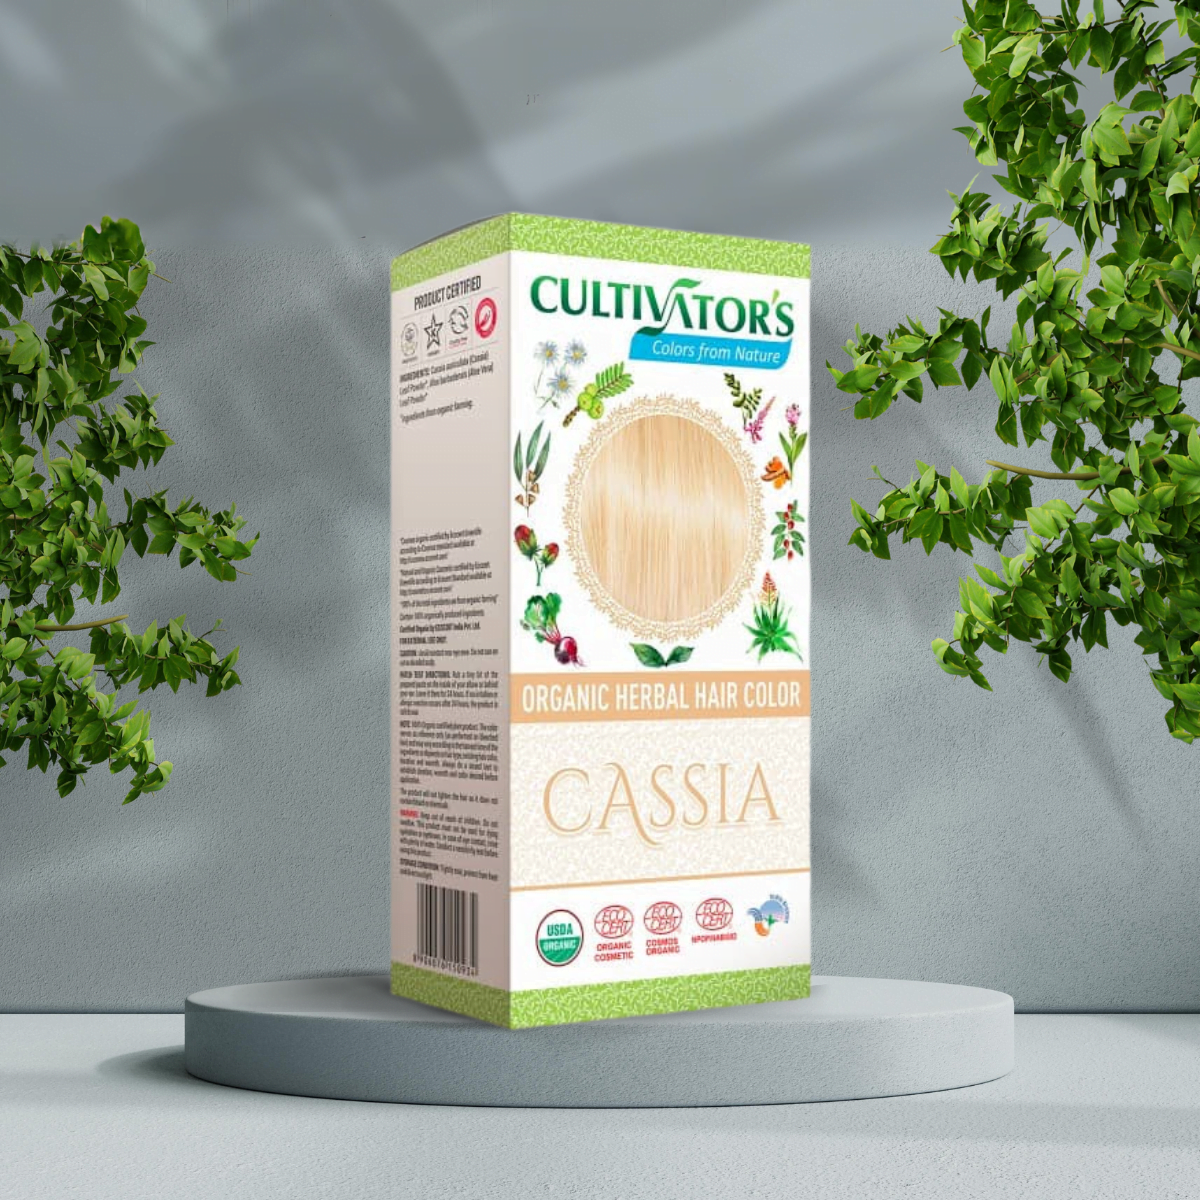 En kasse med Cultivators Cassia, der fremmer helbred og velvære.